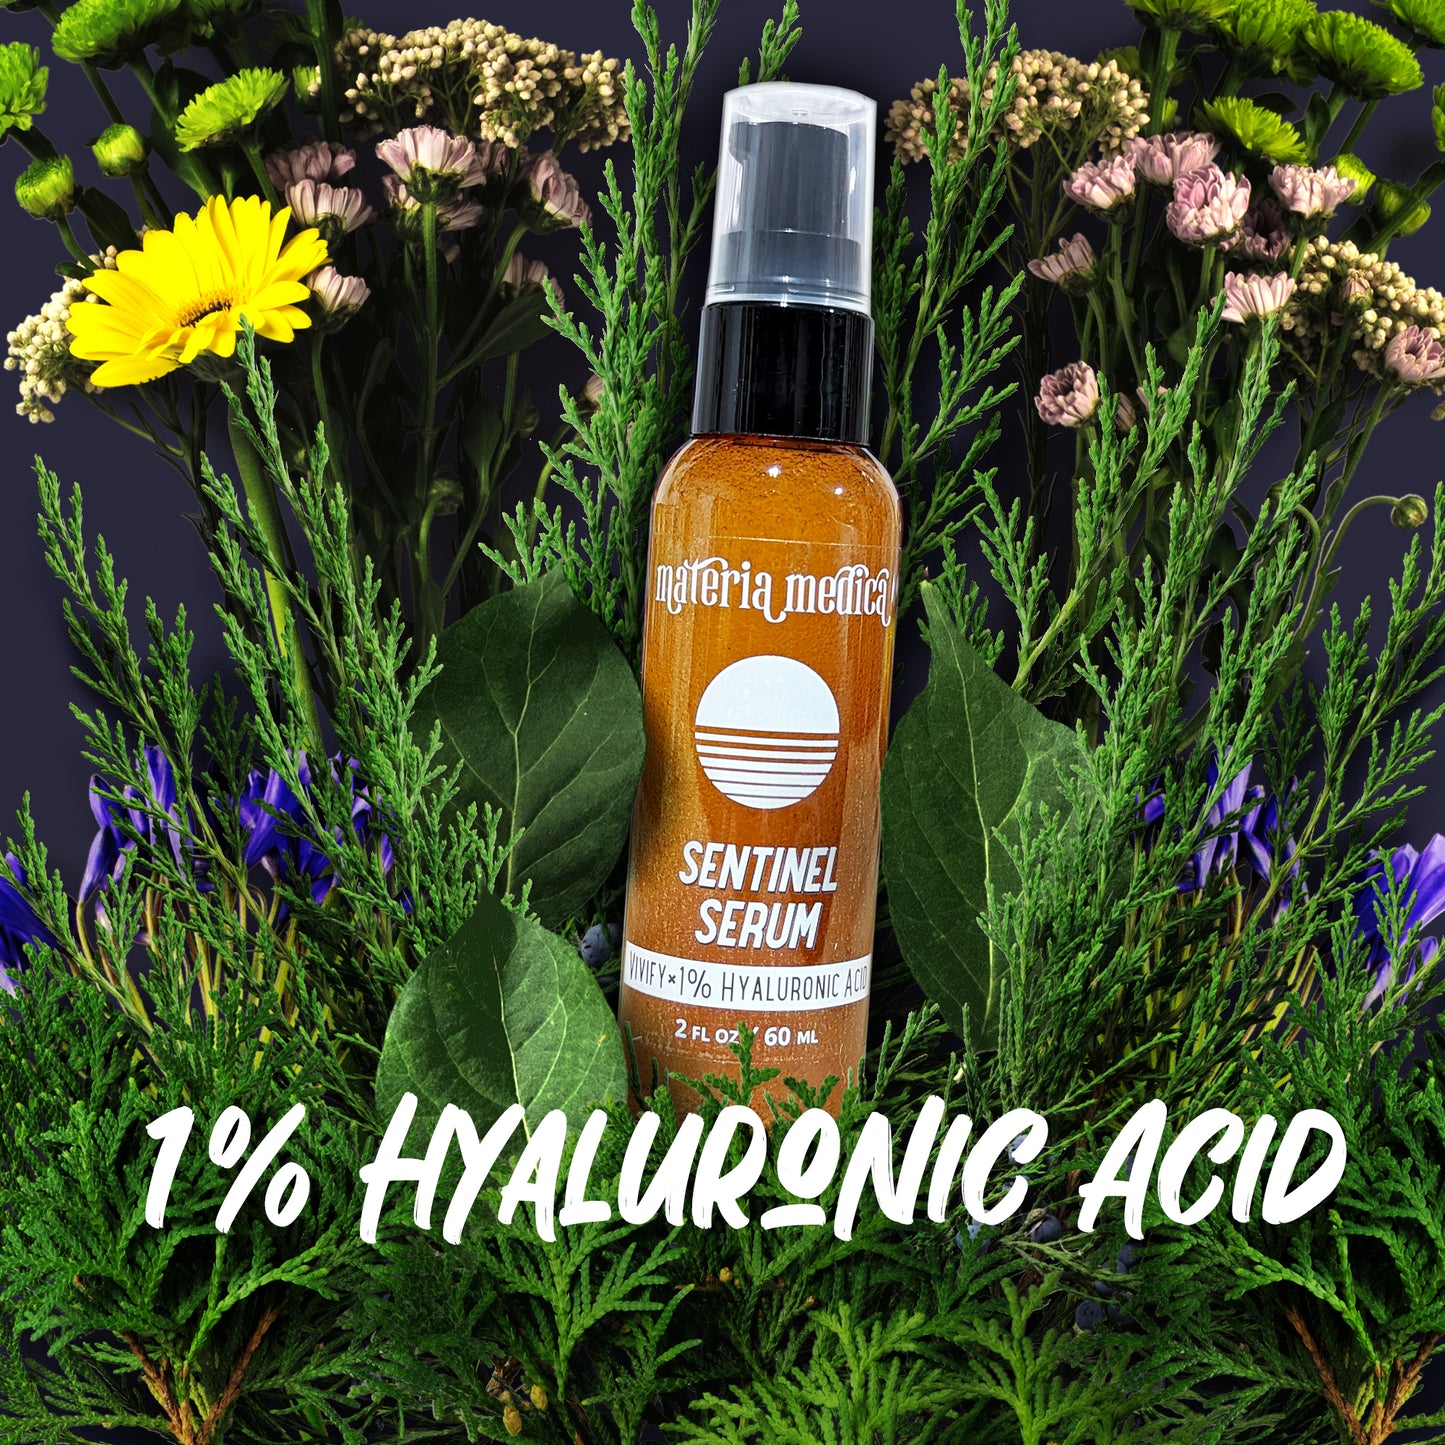 1% Hyaluronic Acid Sentinel Serum